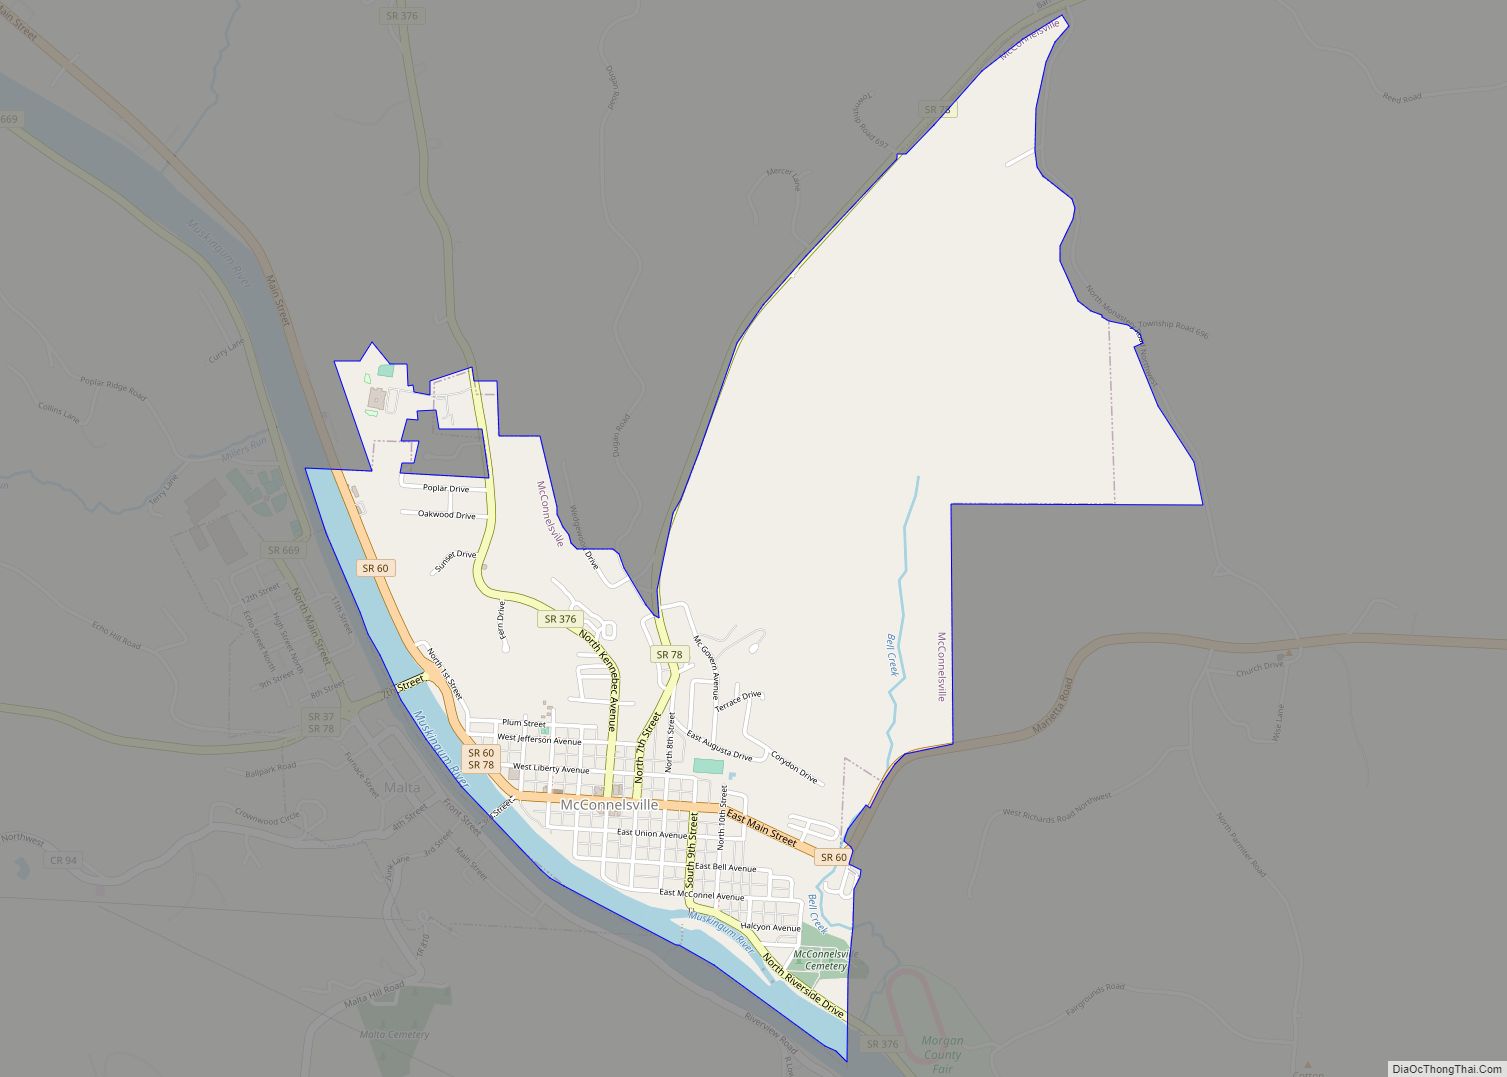 Map of McConnelsville village